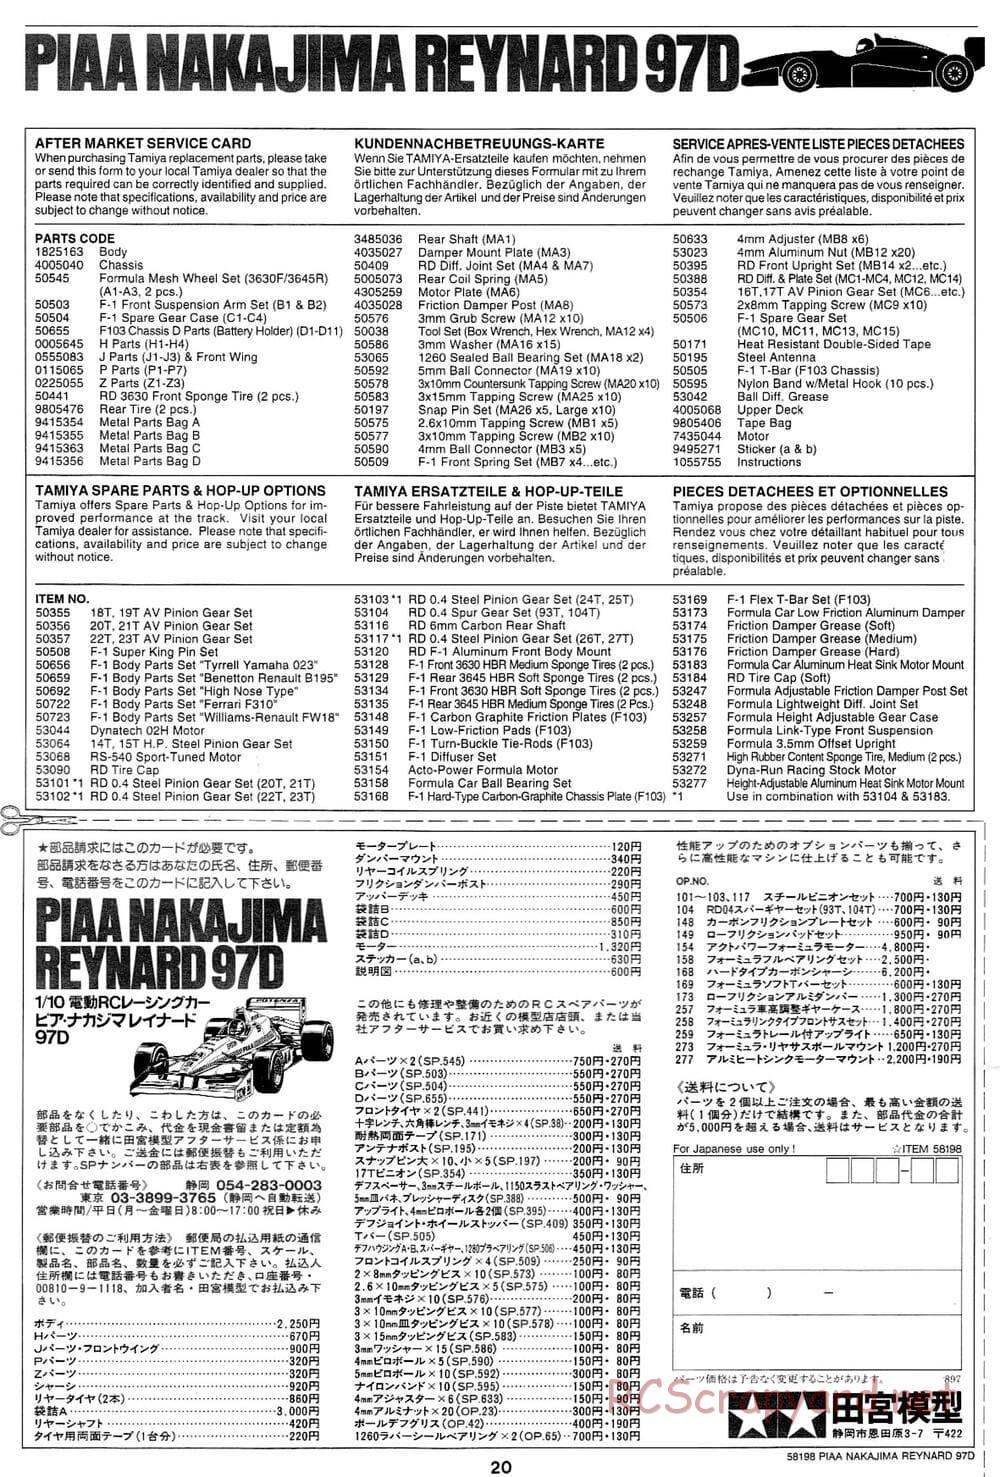 Tamiya - PIAA Nakajima Reynard 97D - F103 Chassis - Manuale - Page 20